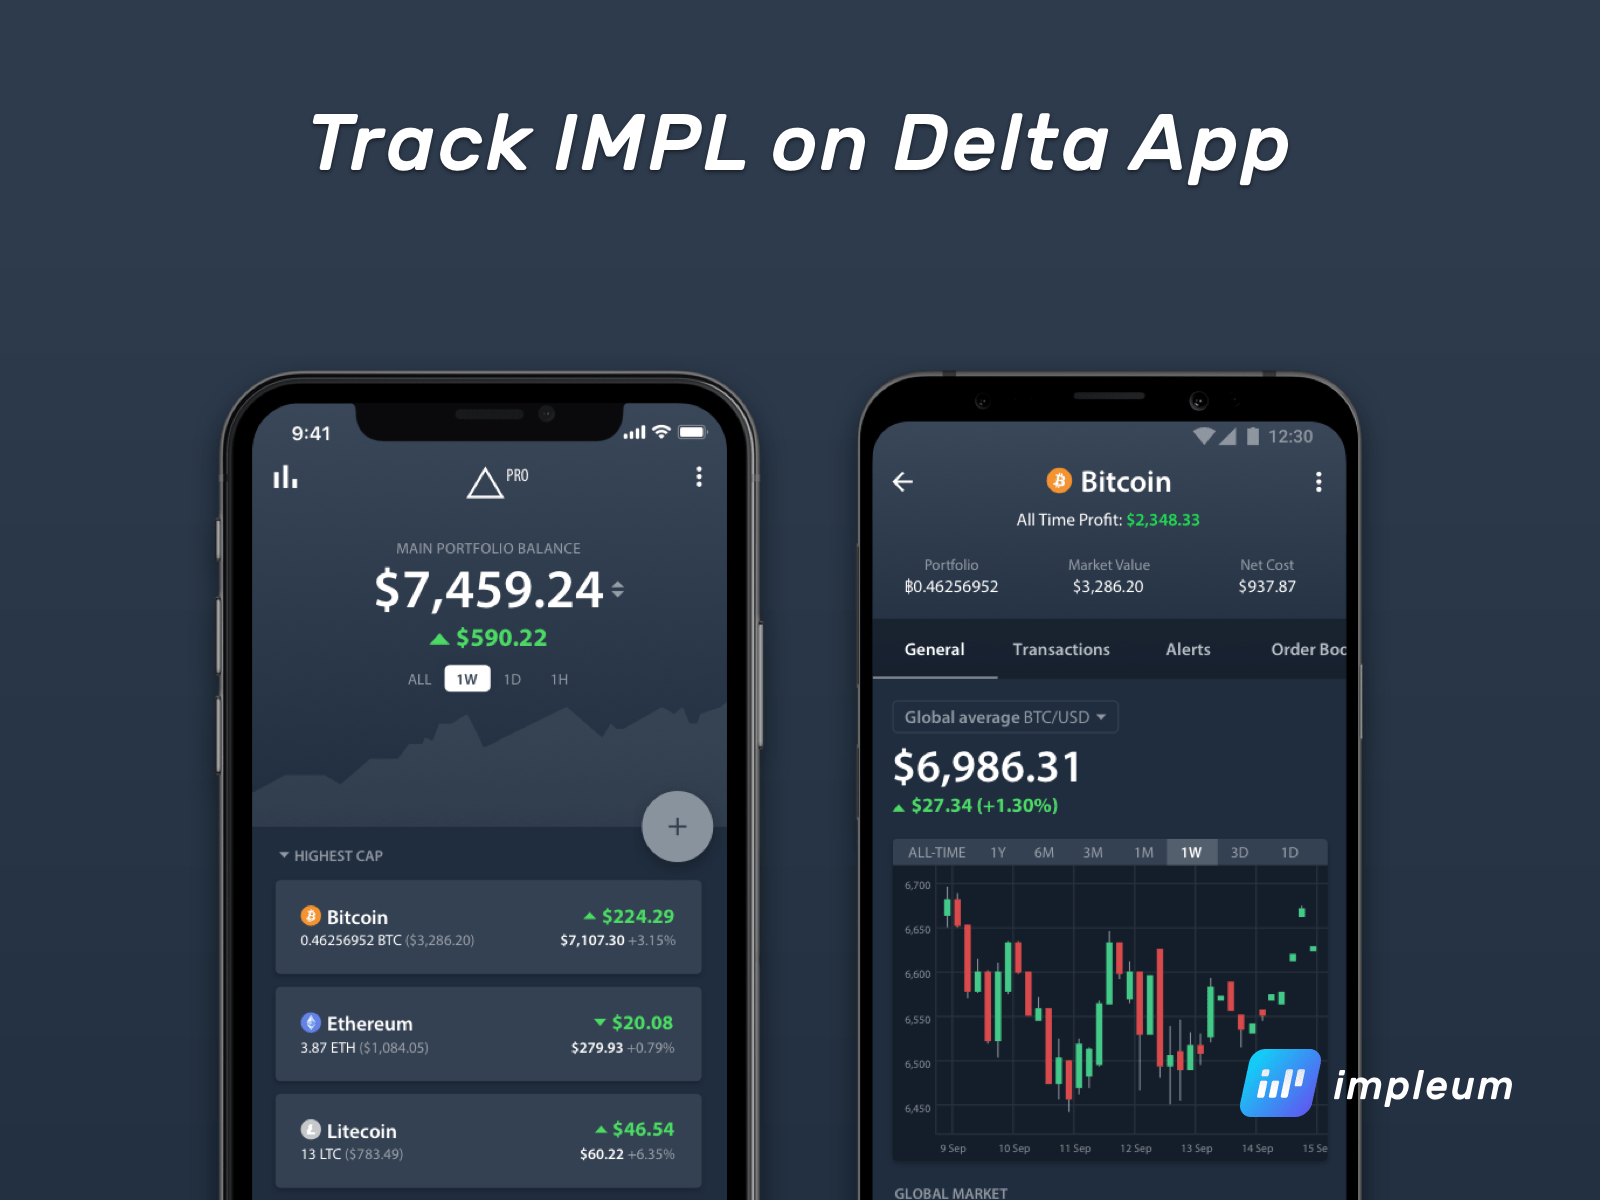 IMPL on Delta cryptocurrency portfolio tracker - Impleum